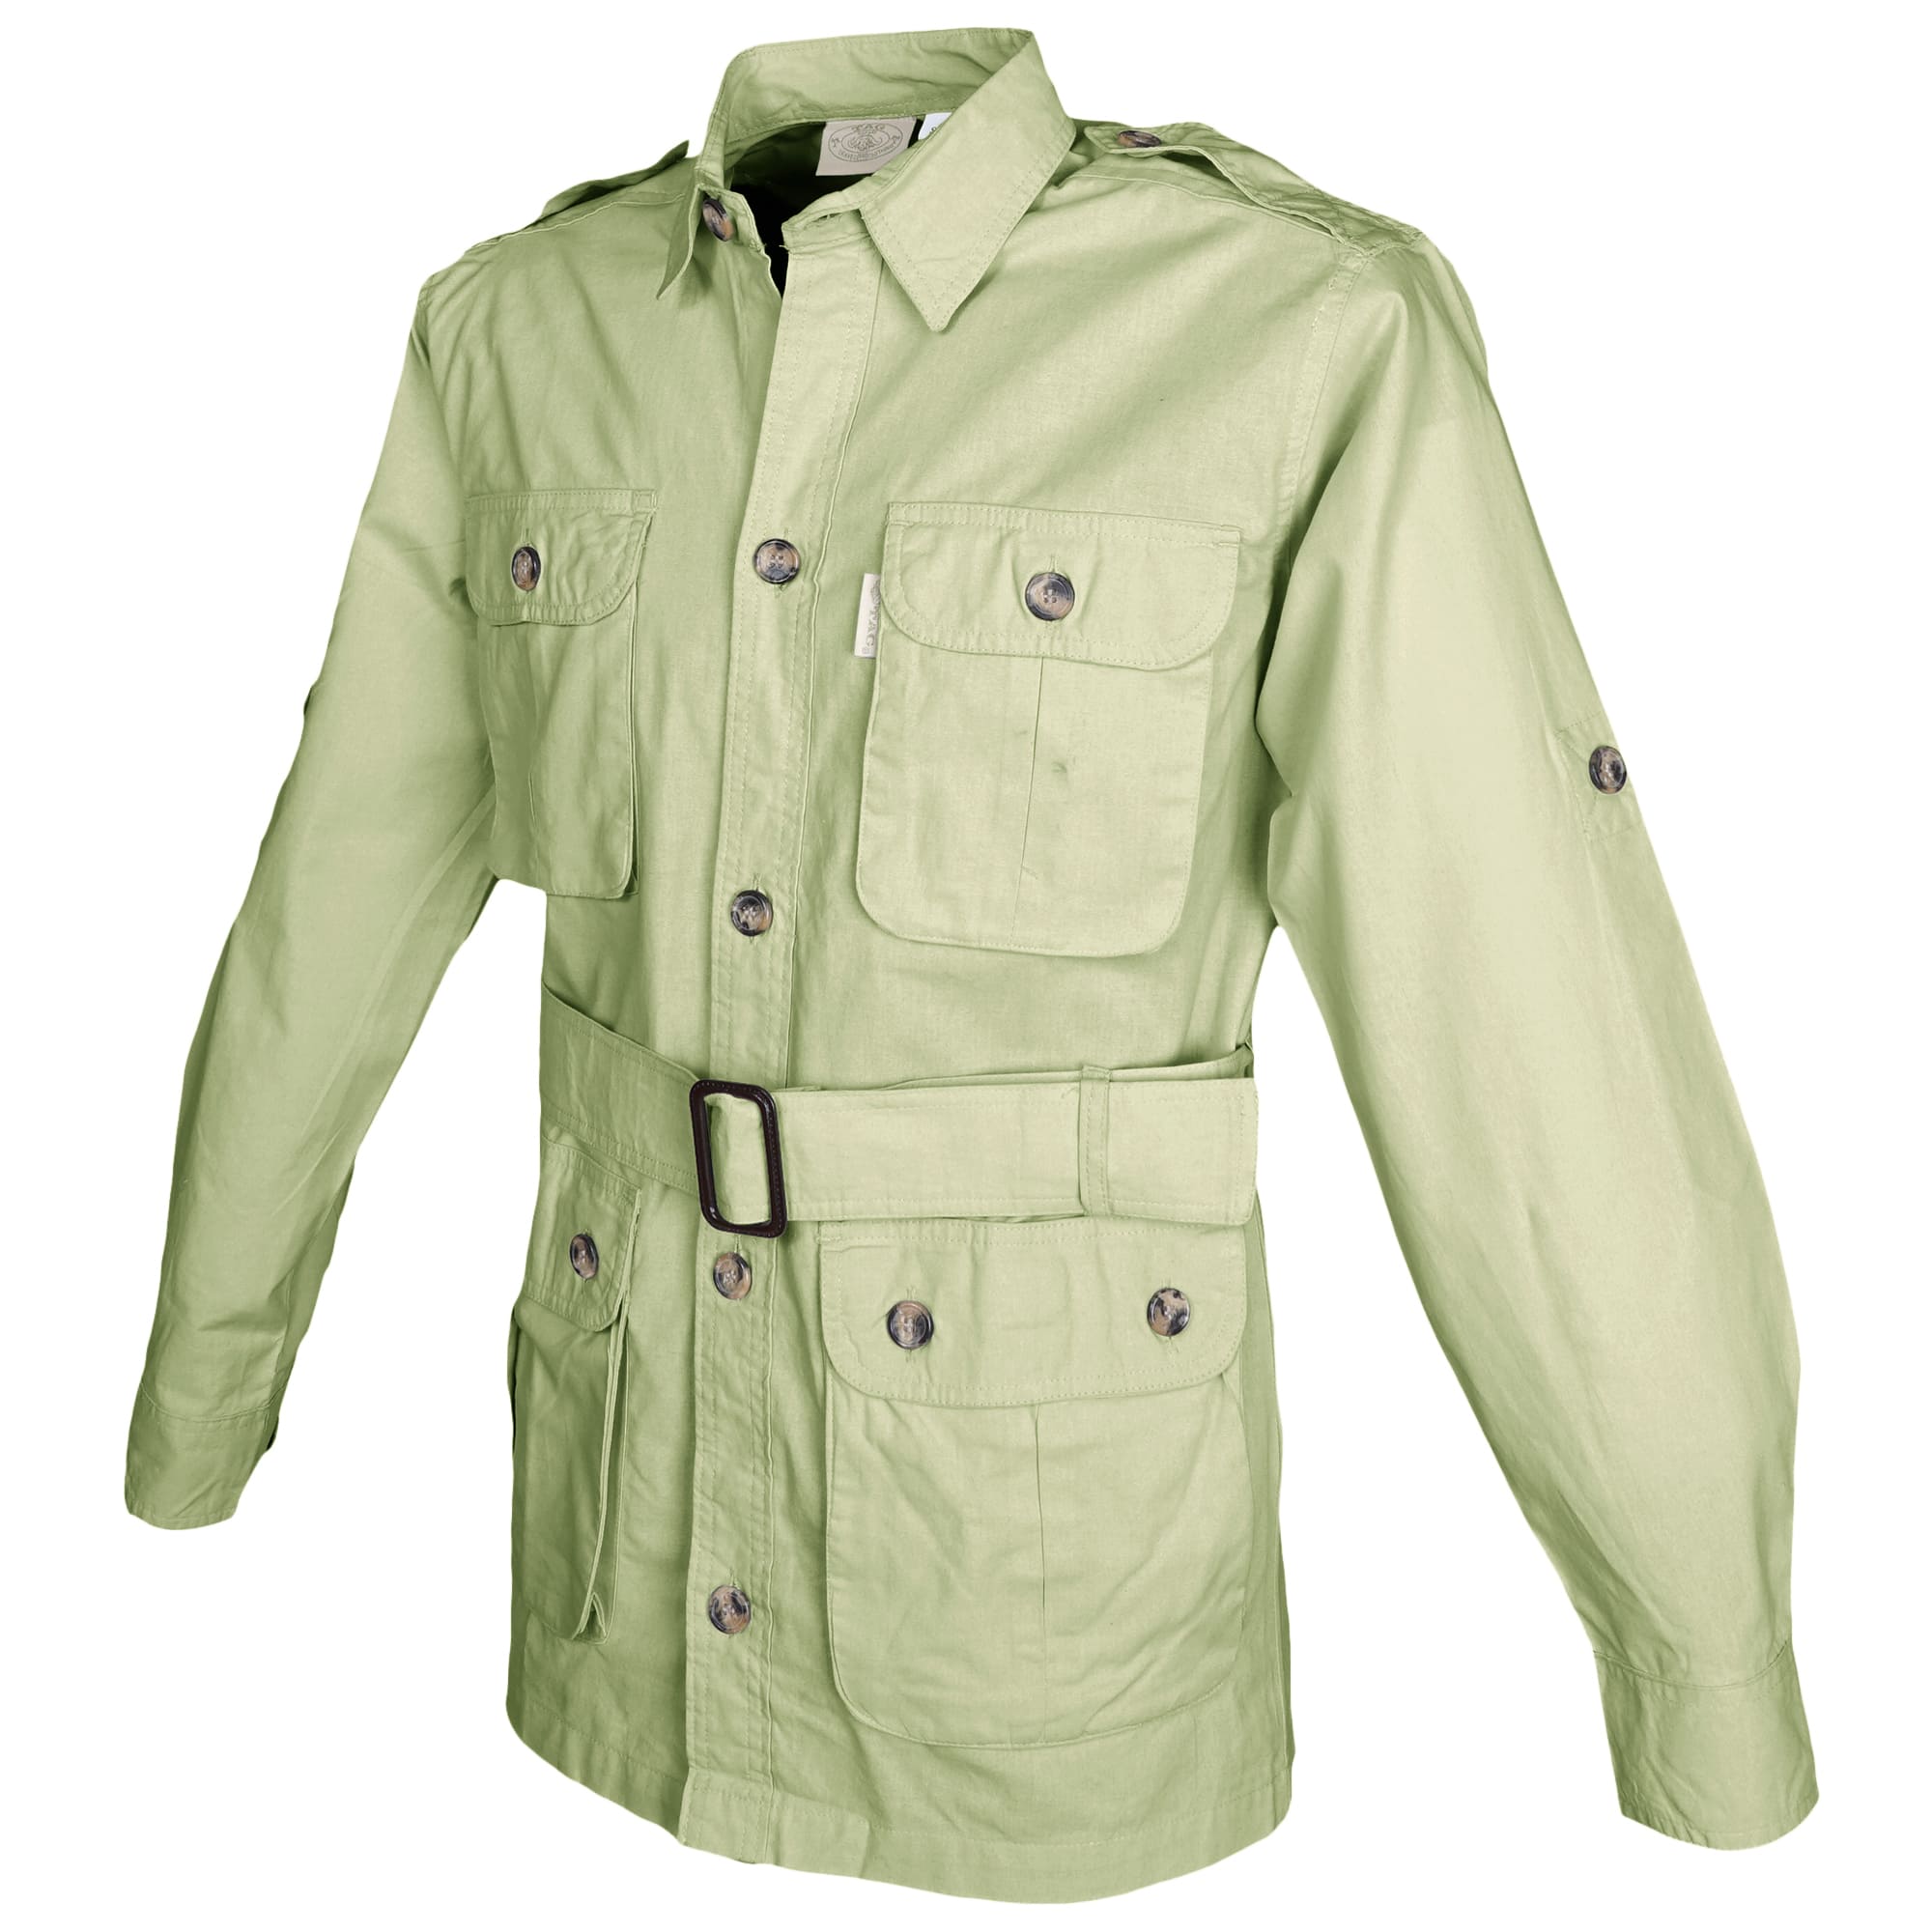 Safari Jacket for Men (Olive, 2X-Large)